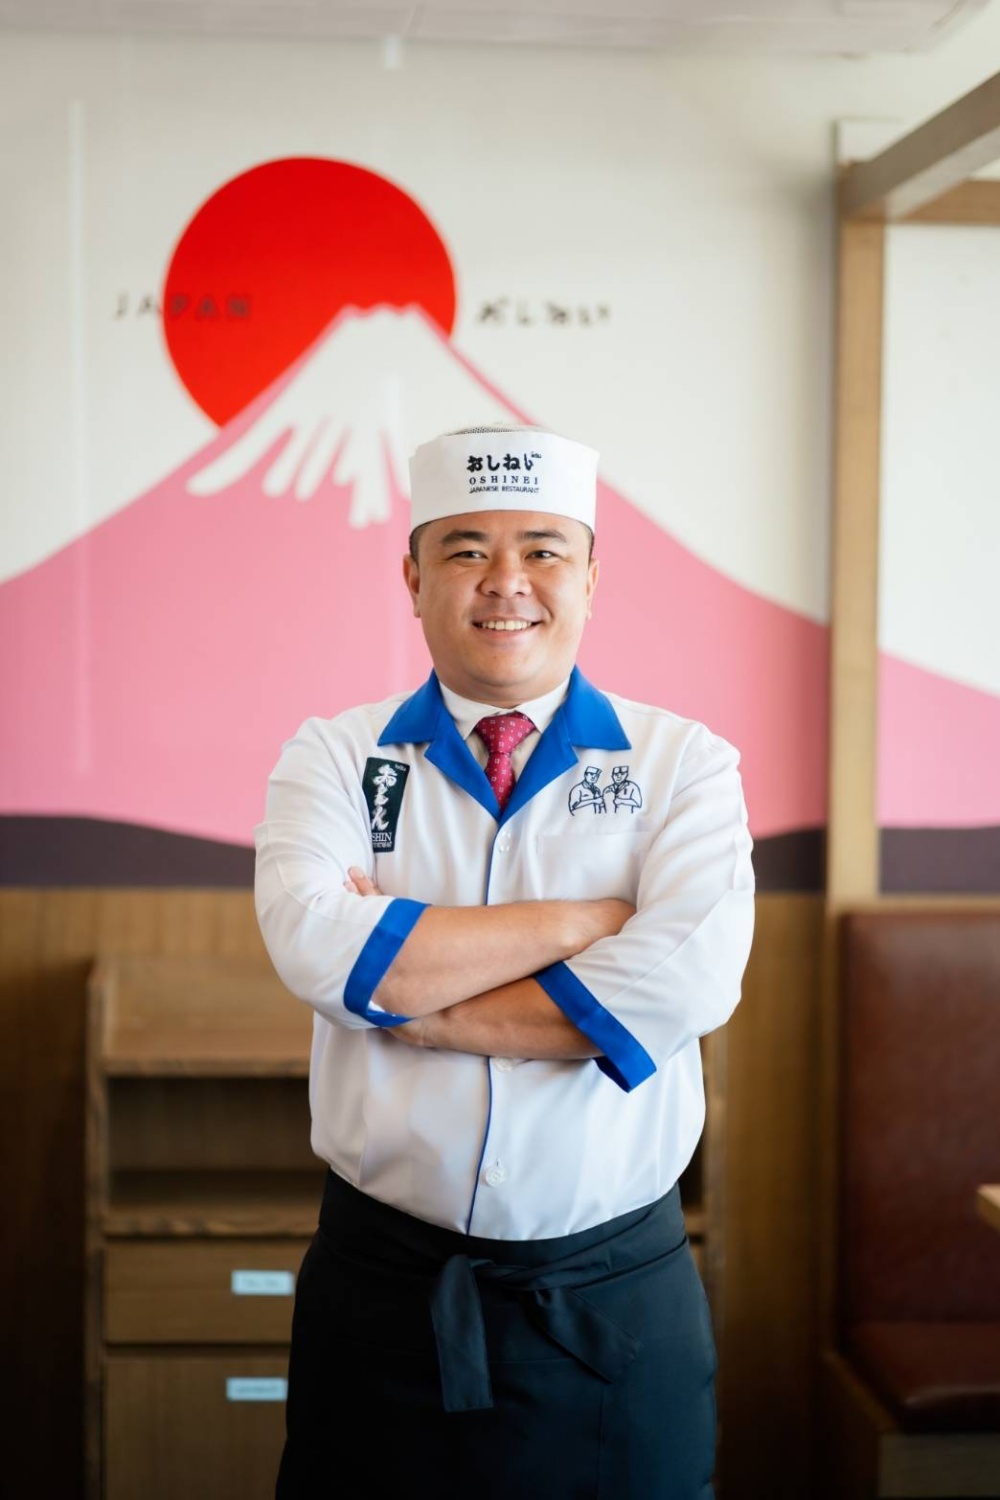 Japanese Food Supporter, Made in JAPAN, วัตถุดิบแท้, ส่งต่อความรักด้วยความอร่อย, #วัตถุดิบอาหารนำเข้าจากประเทศญี่ปุ่น #เจโทรกรุงเทพฯ